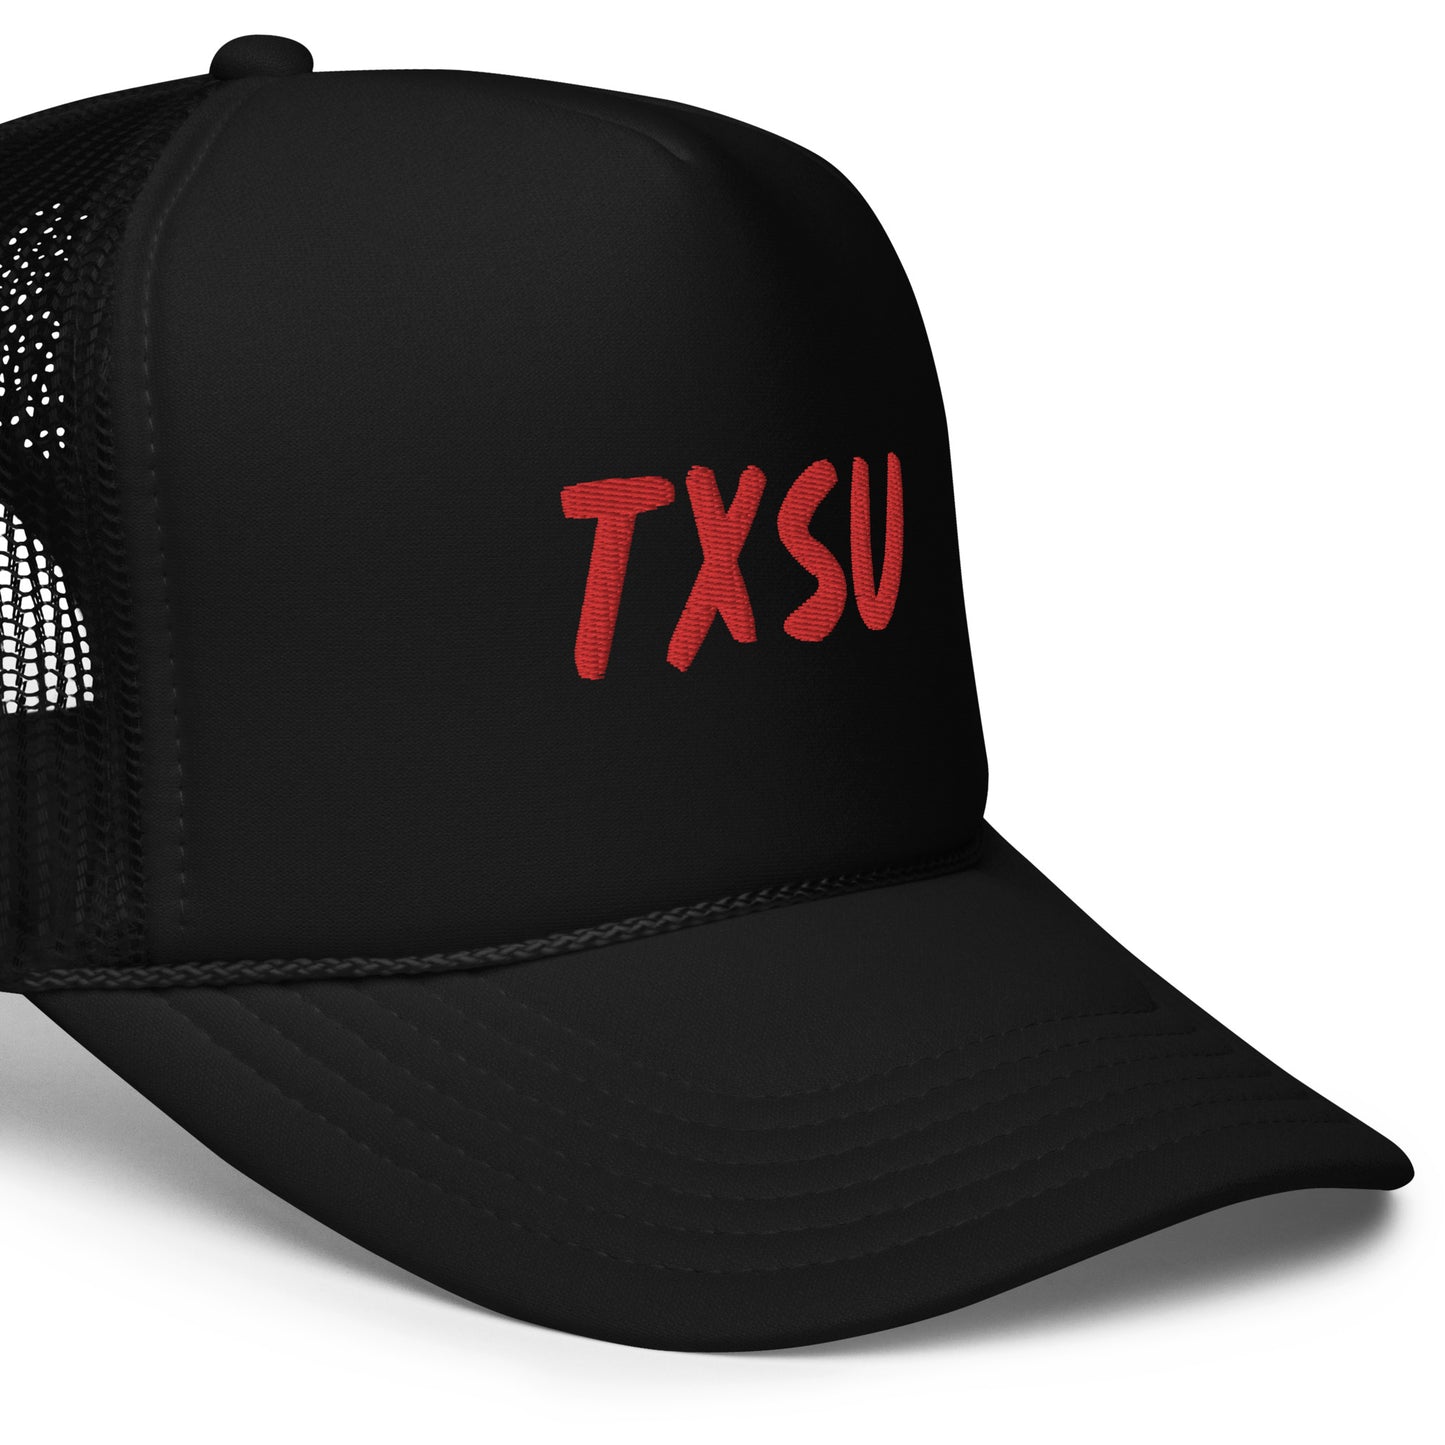 TXSU Trucker Cap